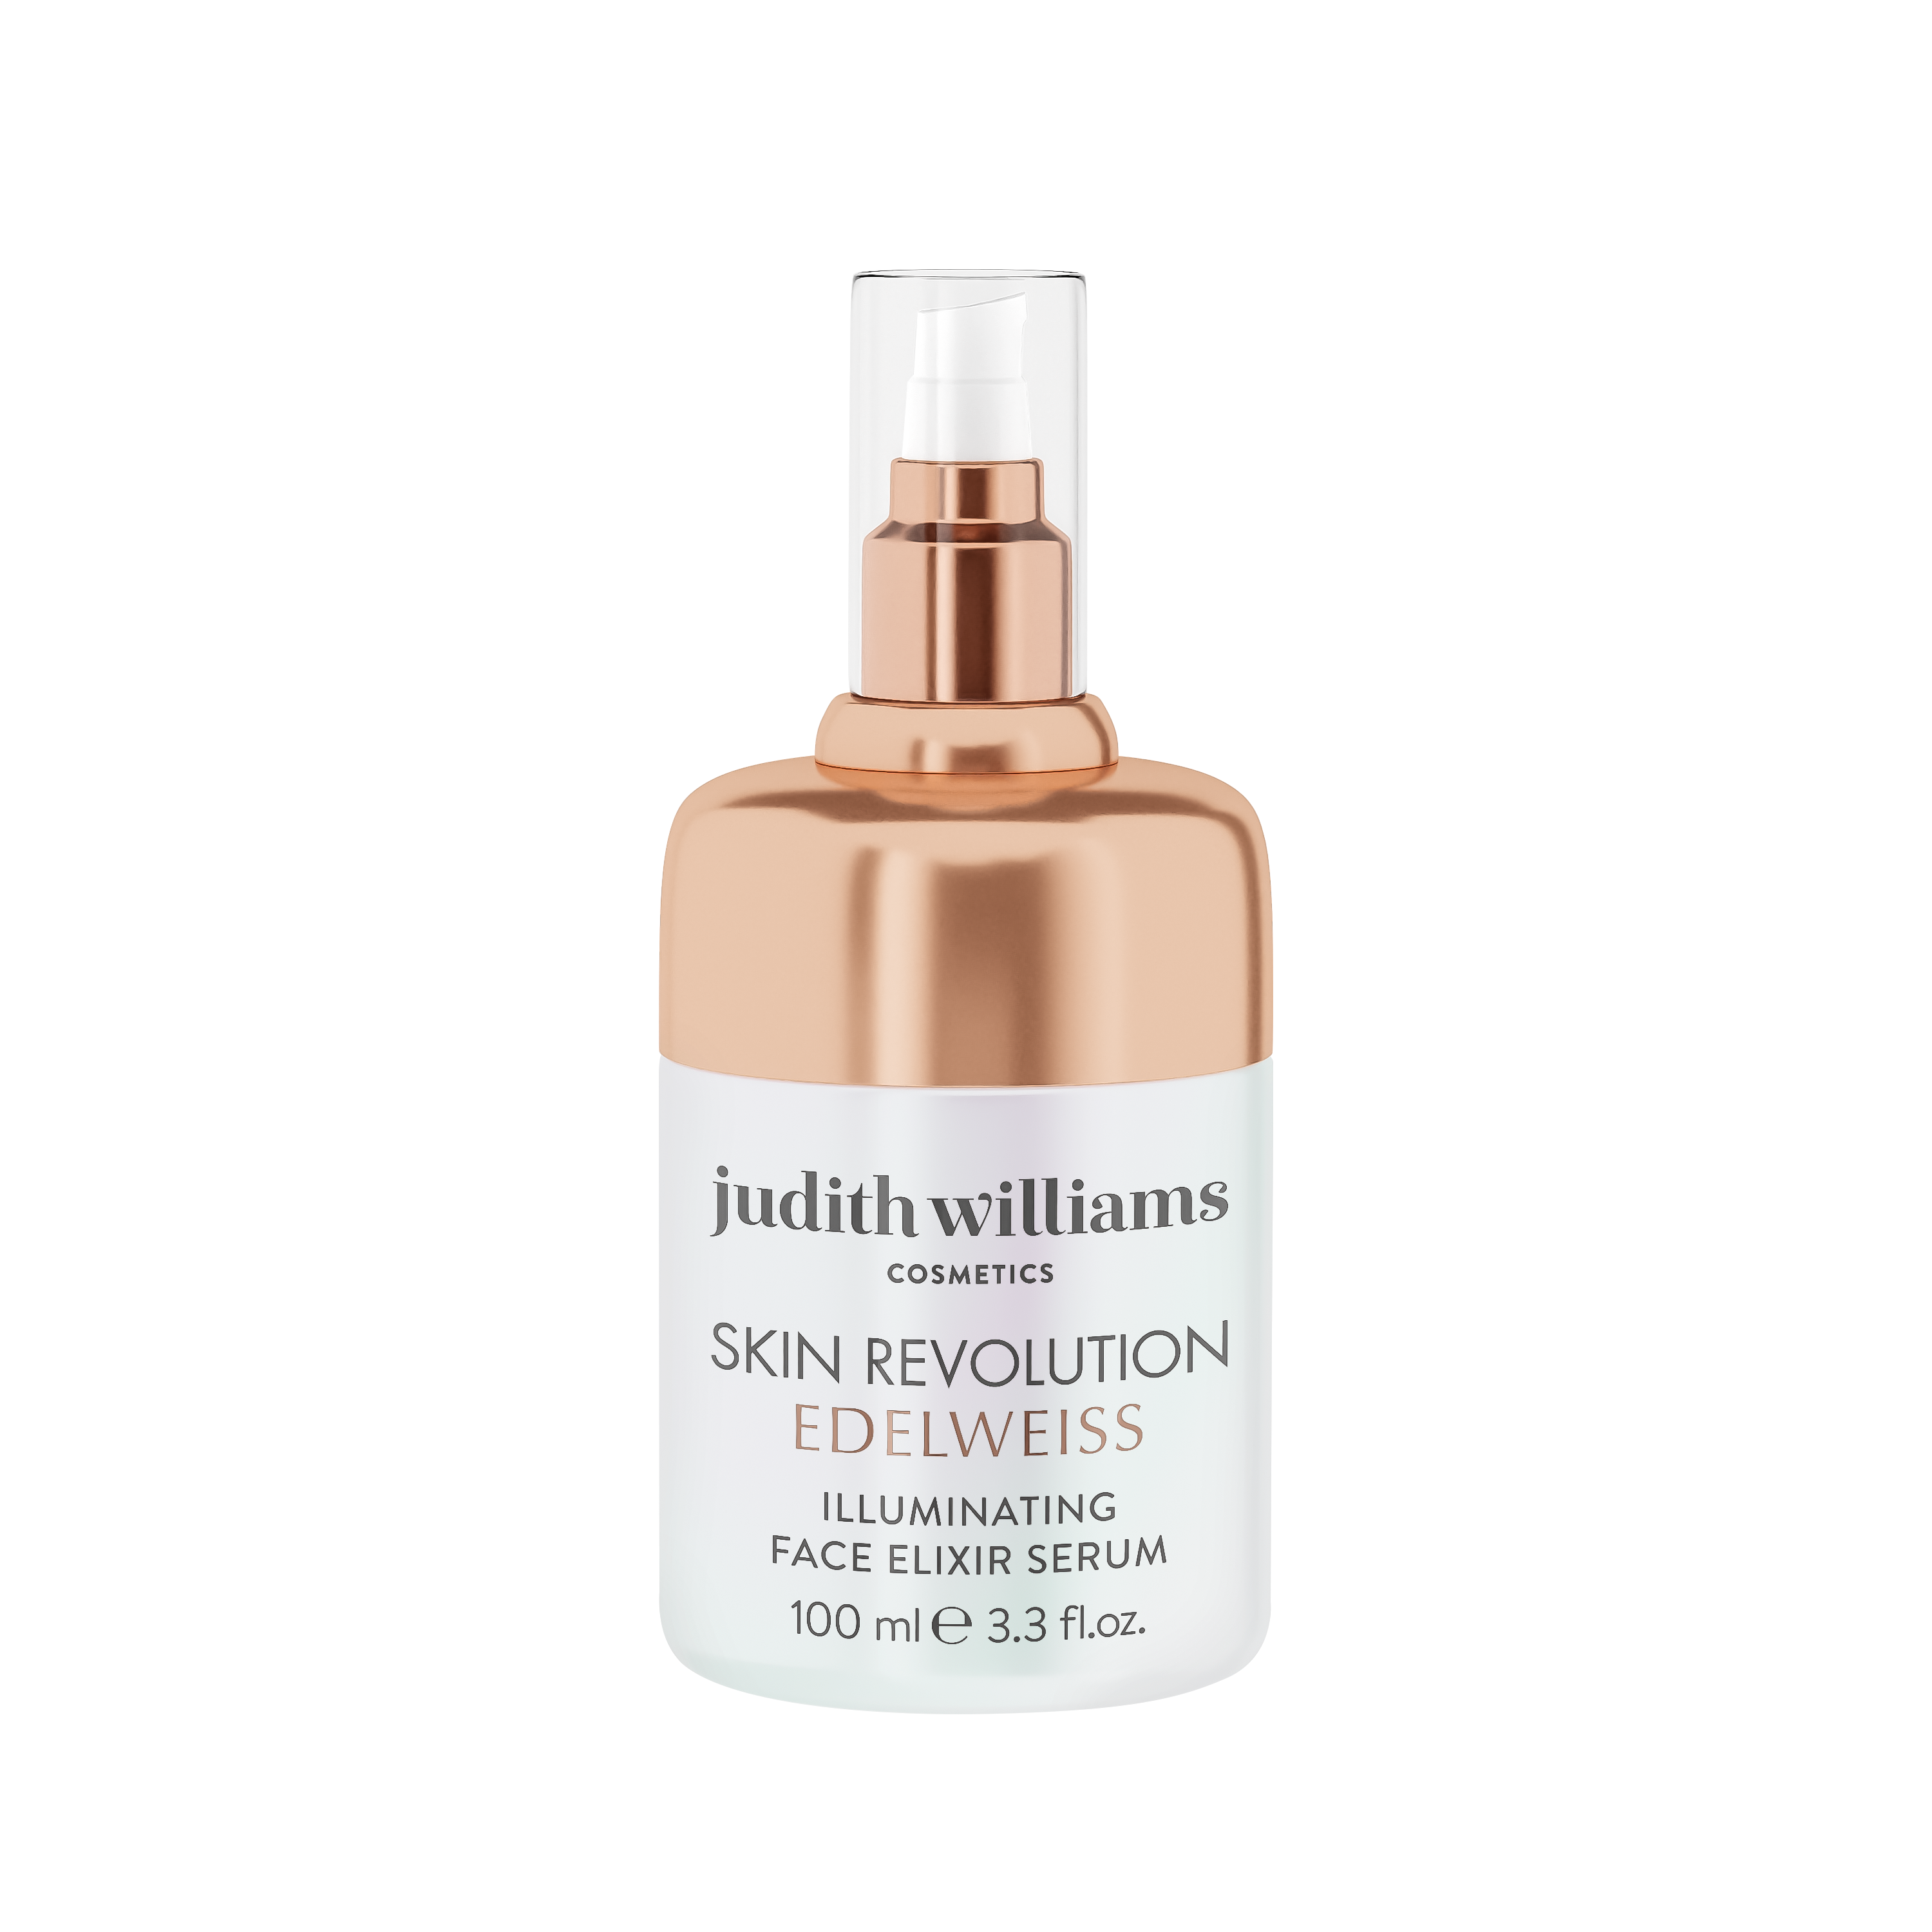 Gesichtsserum | Skin Revolution Edelweiss | Illuminating Face Elixir Serum | Judith Williams